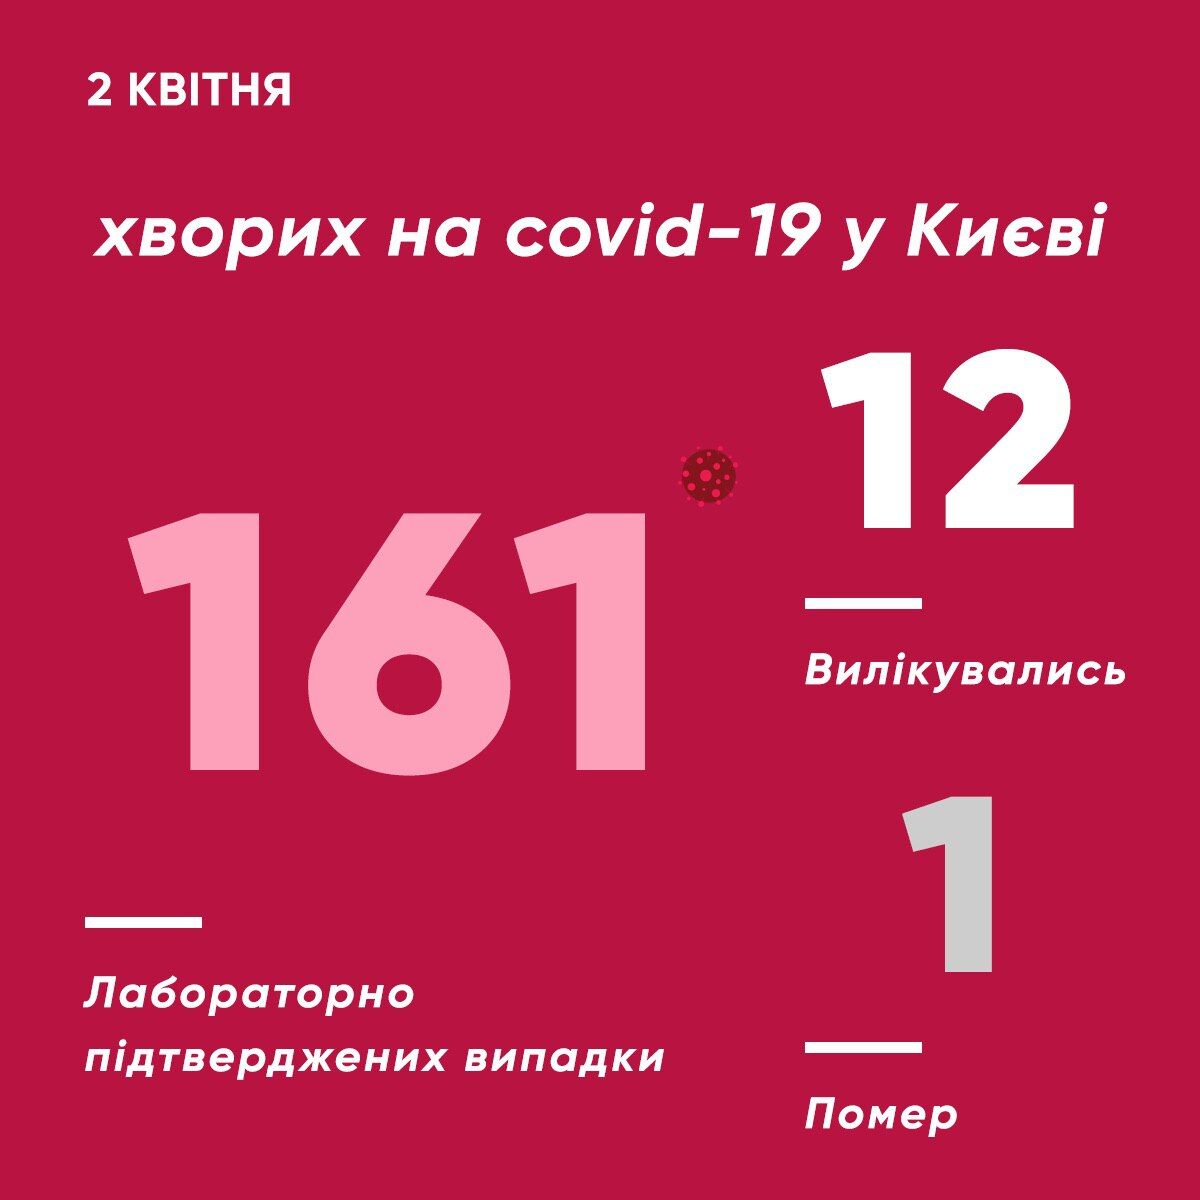 Статистика распространения коронавируса в Киеве